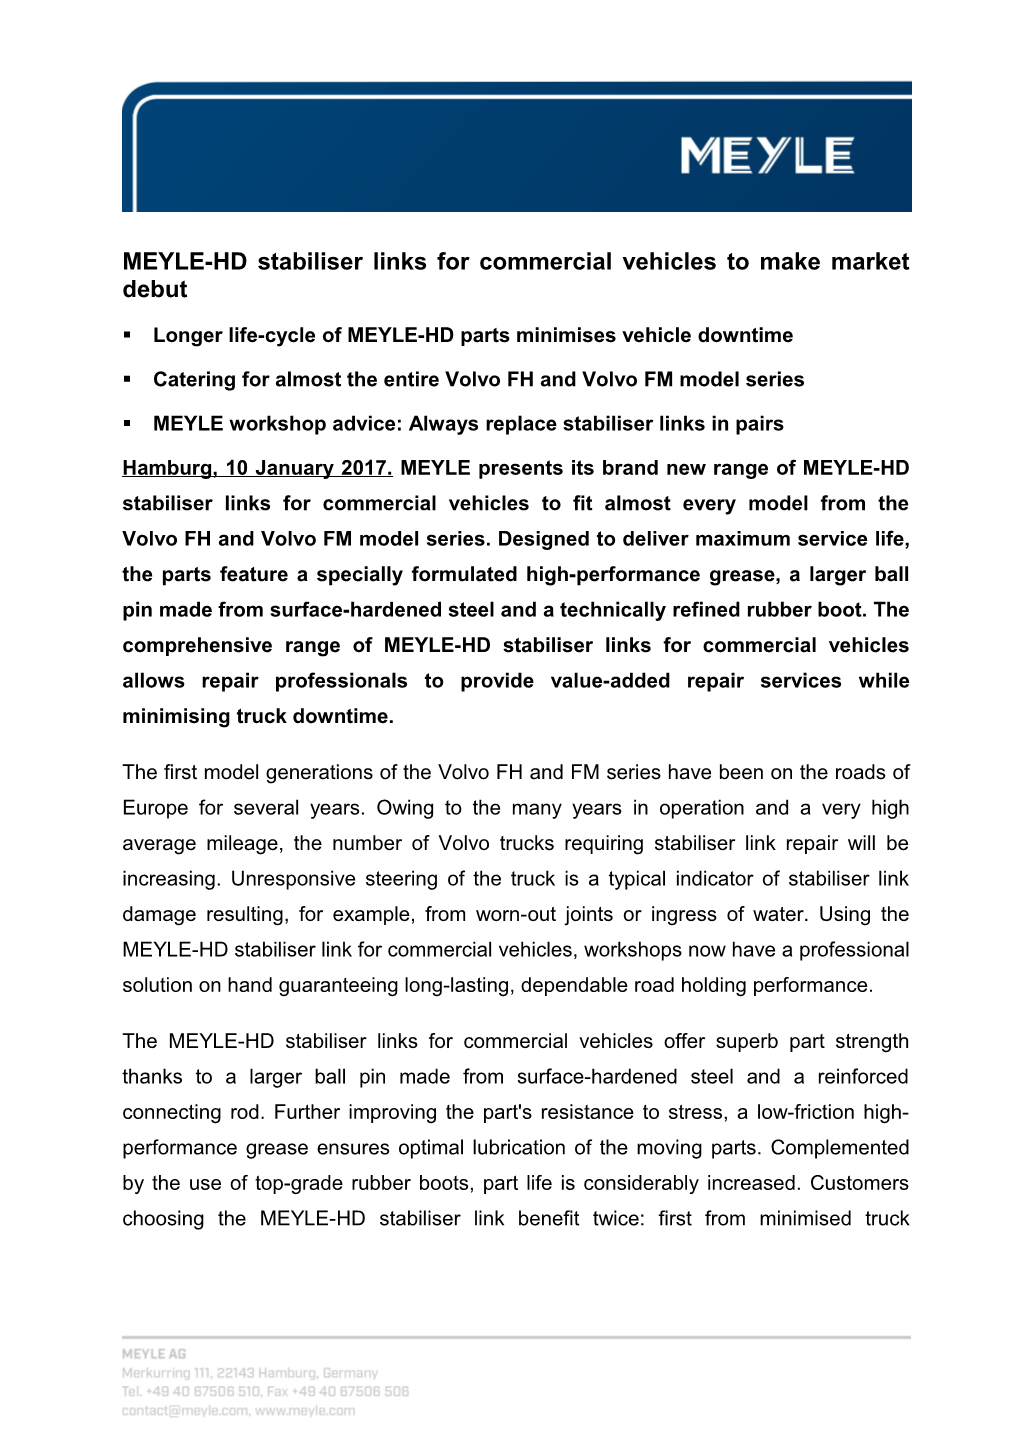 MEYLE-HD Stabiliser Links for Commercial Vehicles to Make Market Debut